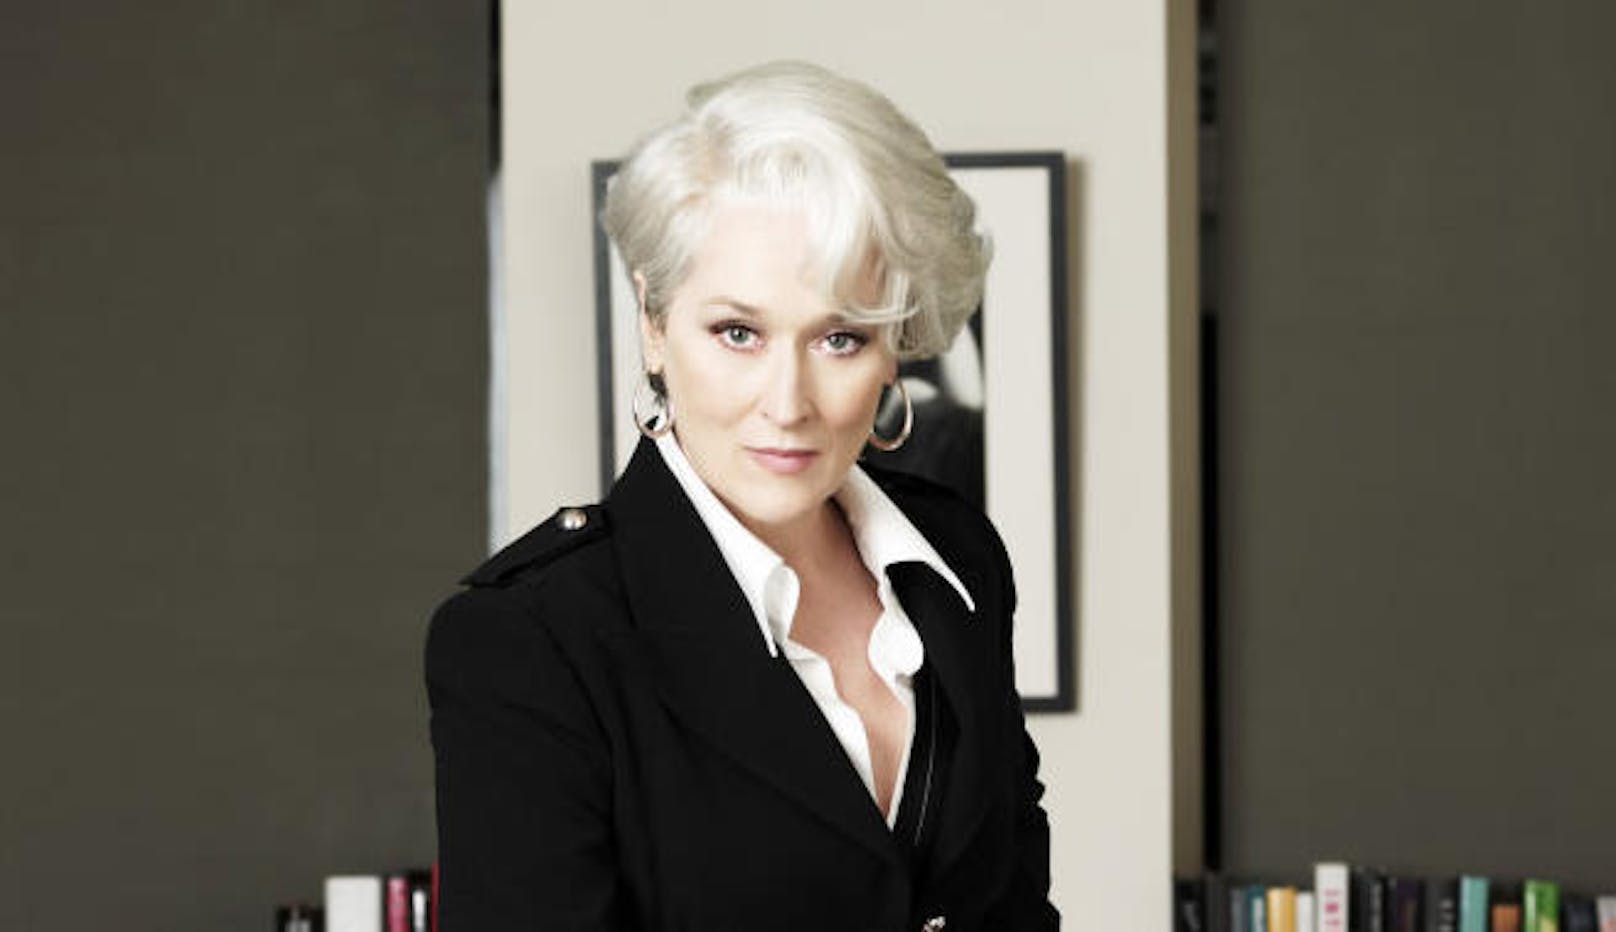 Meryl Streep in "Der Teufel trägt Prada"